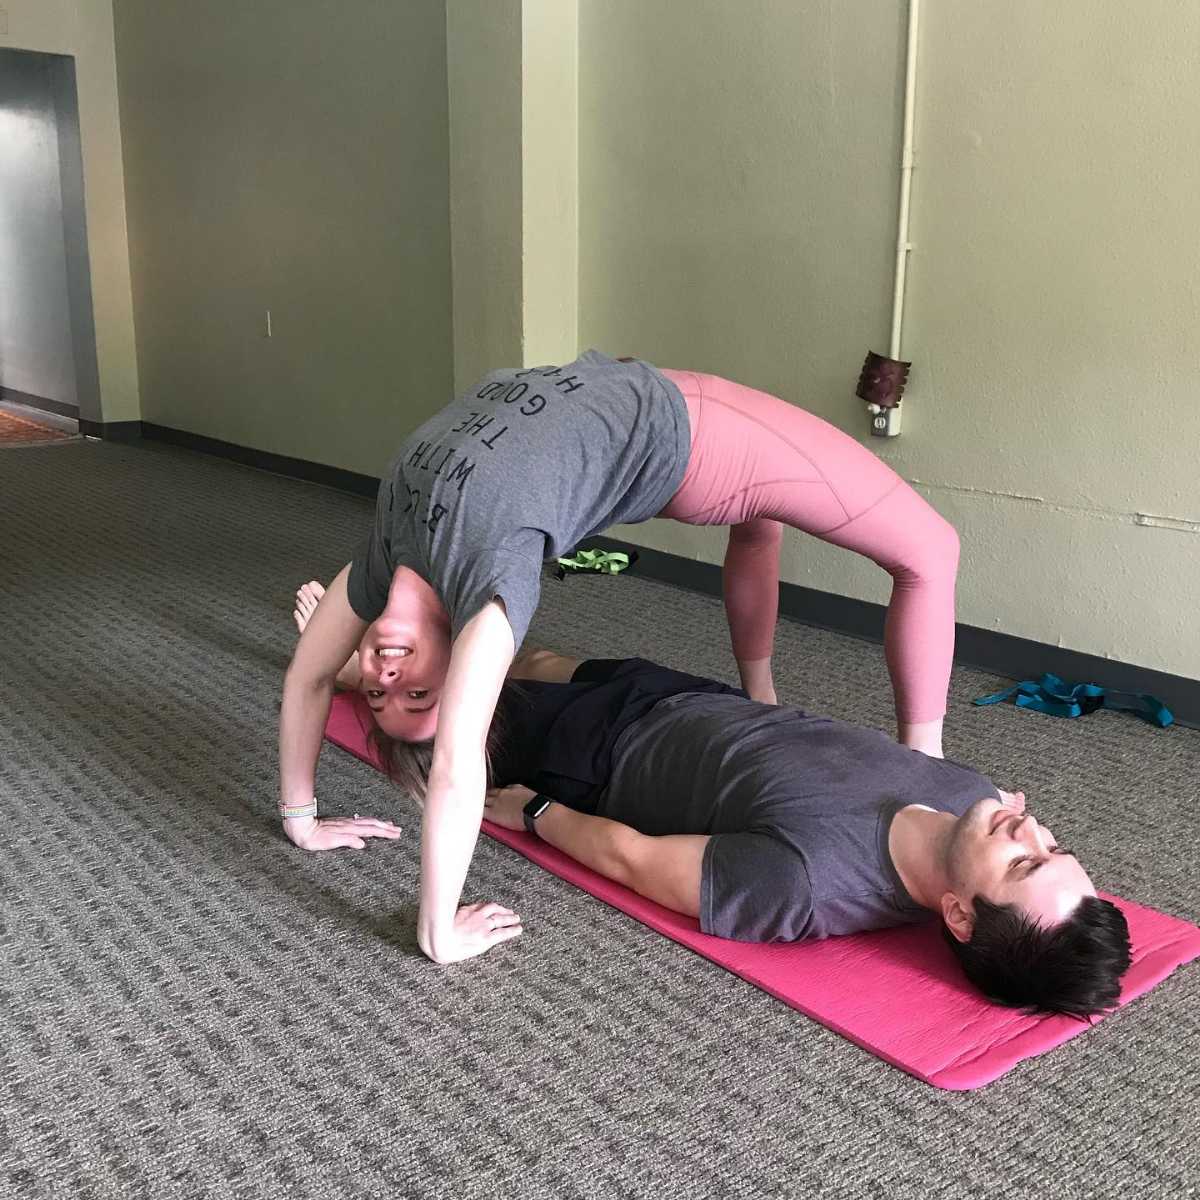 Black Swan Yoga brings donation-based classes to Lakewood